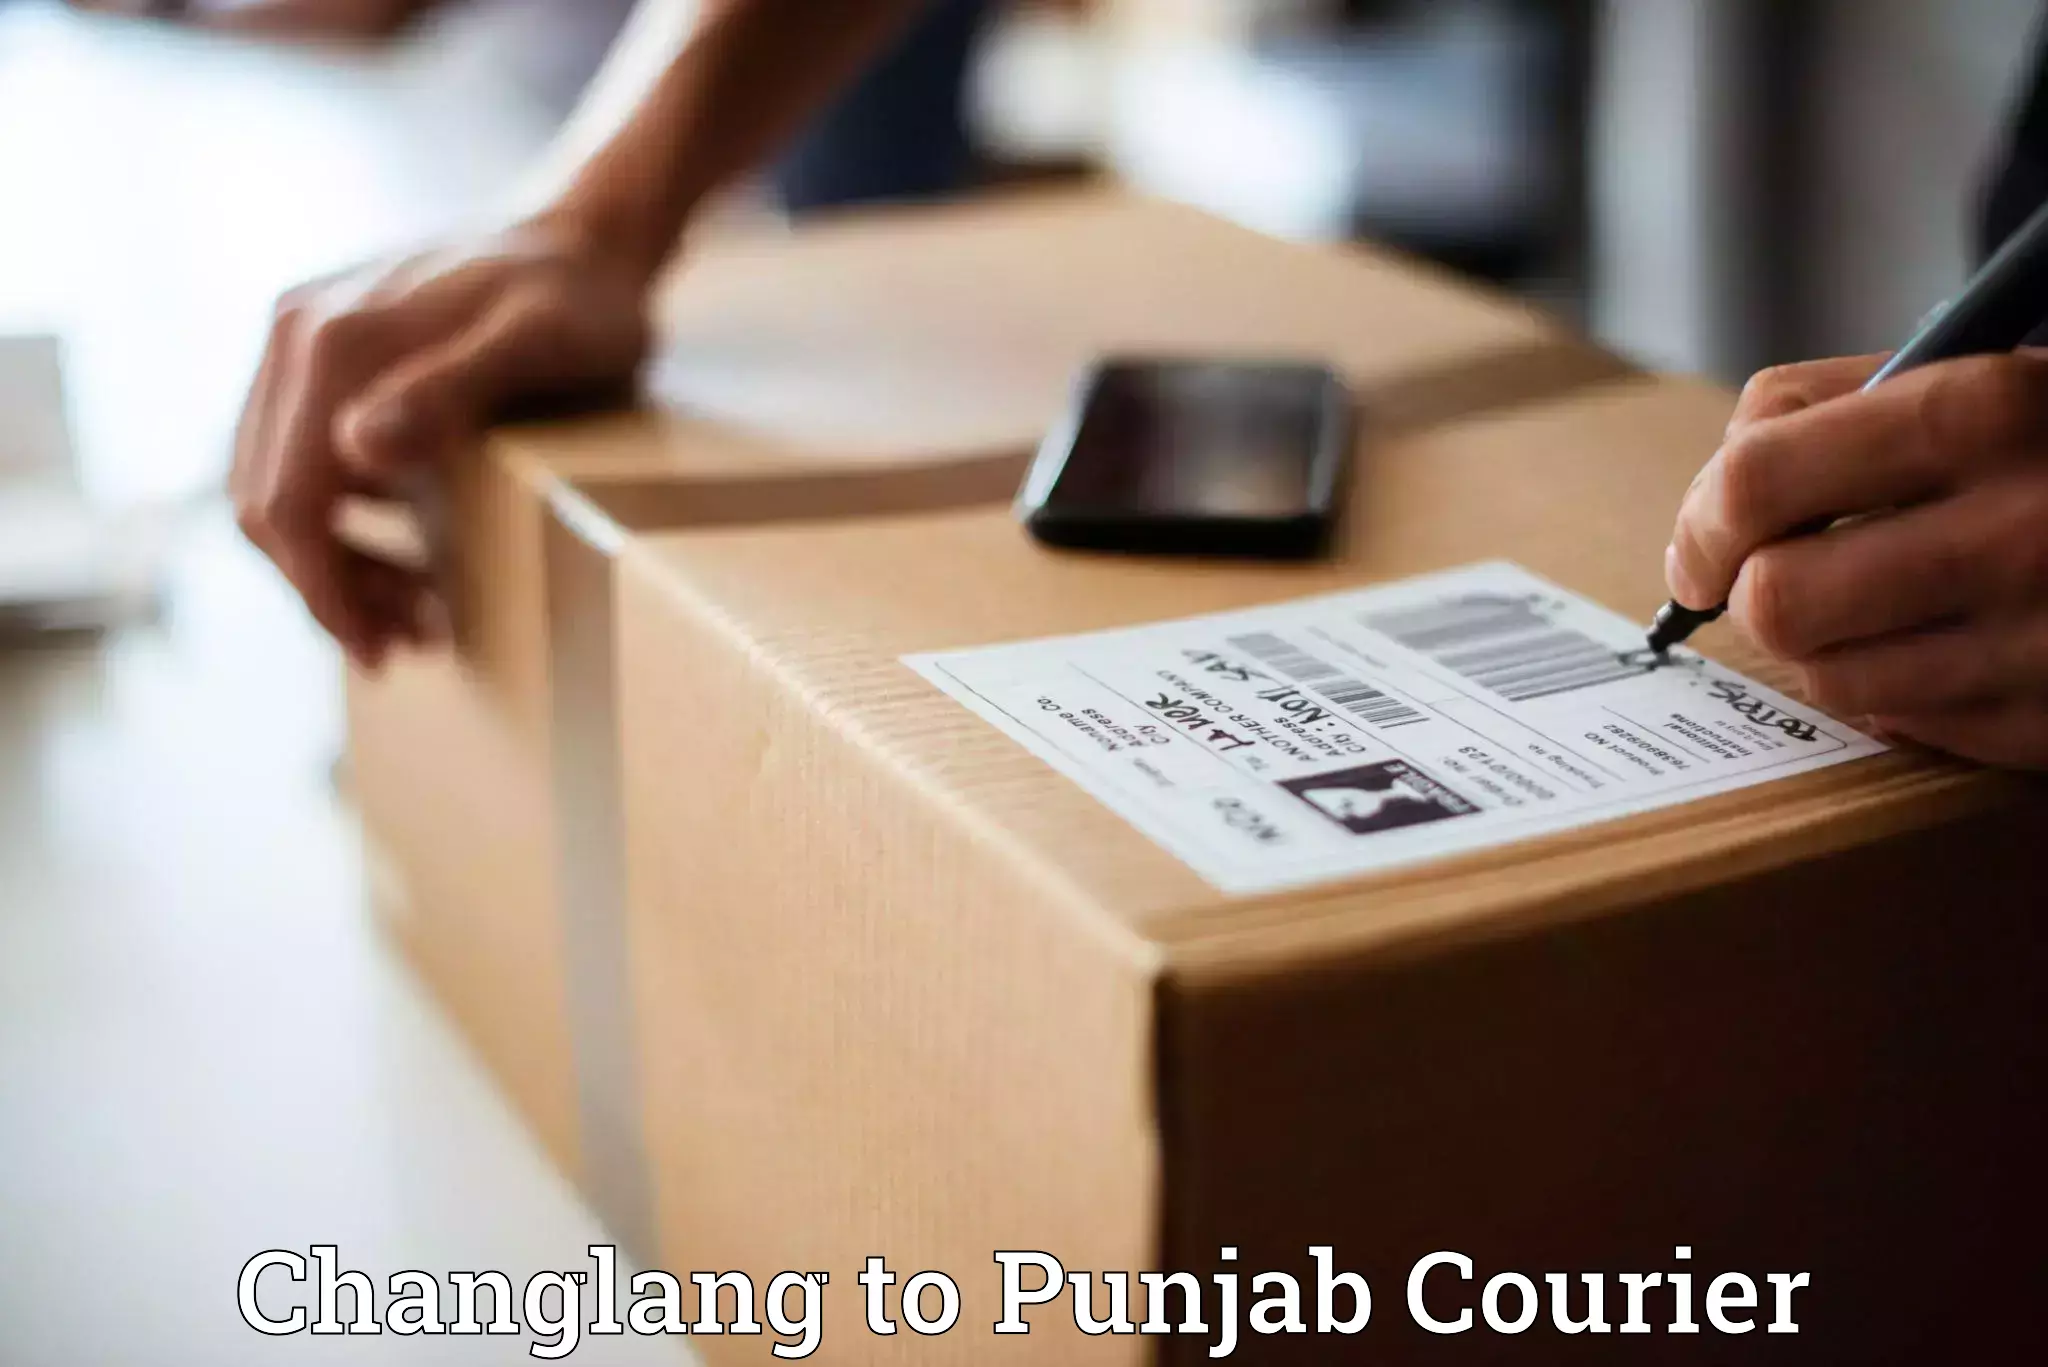 Bulk courier orders Changlang to Khanna